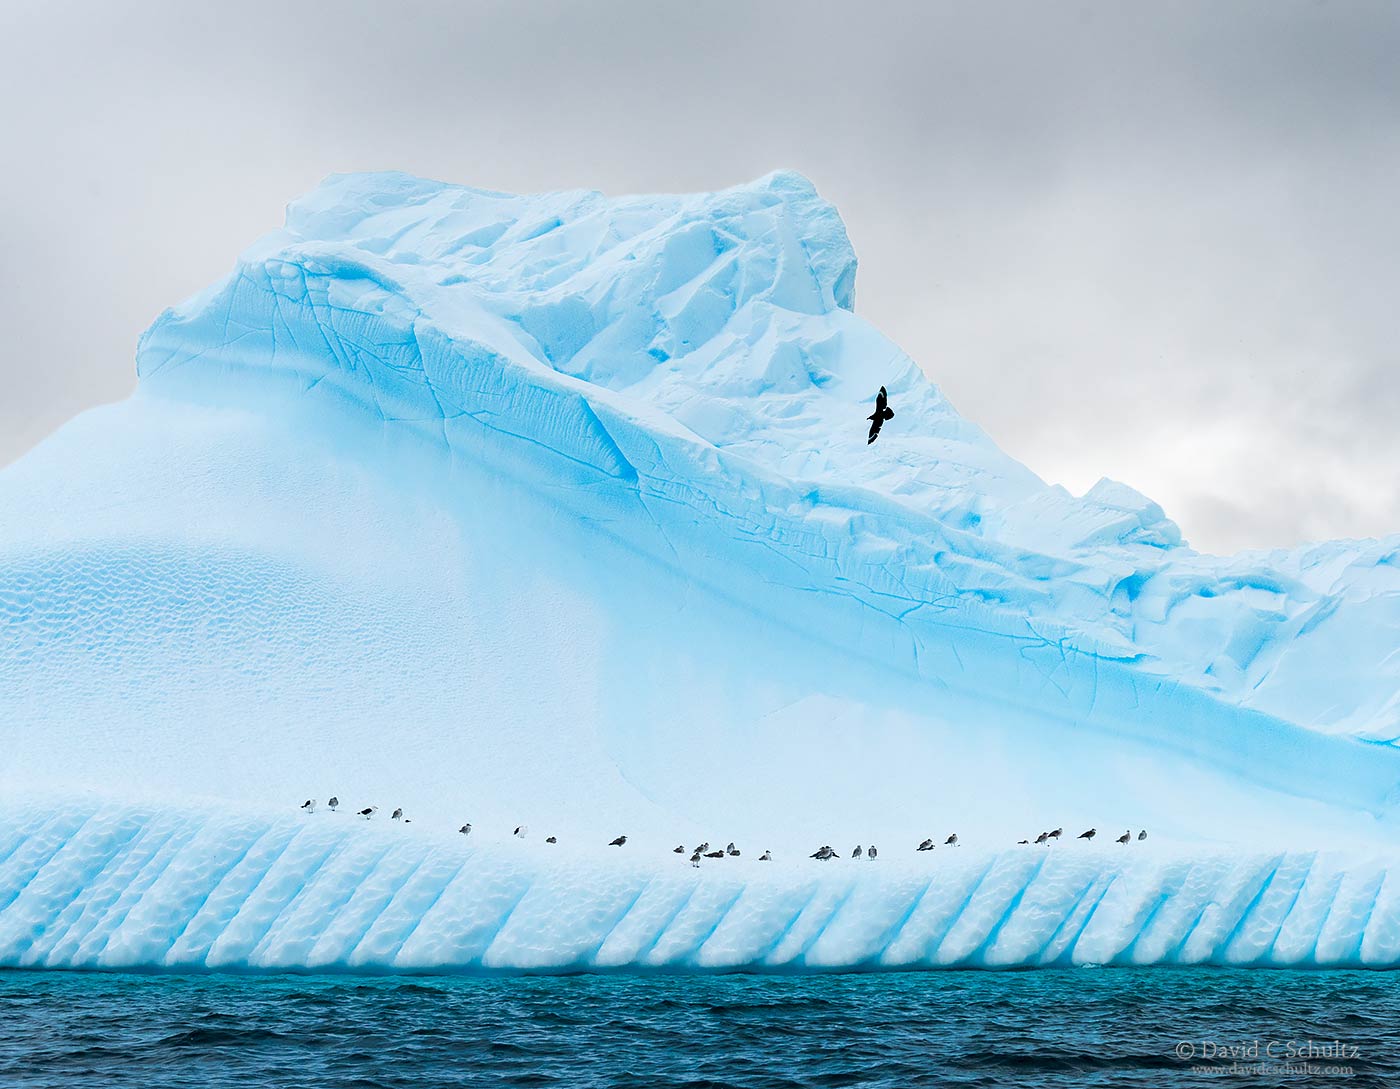 Iceberg and birds in Antarctica - Image #167-5209